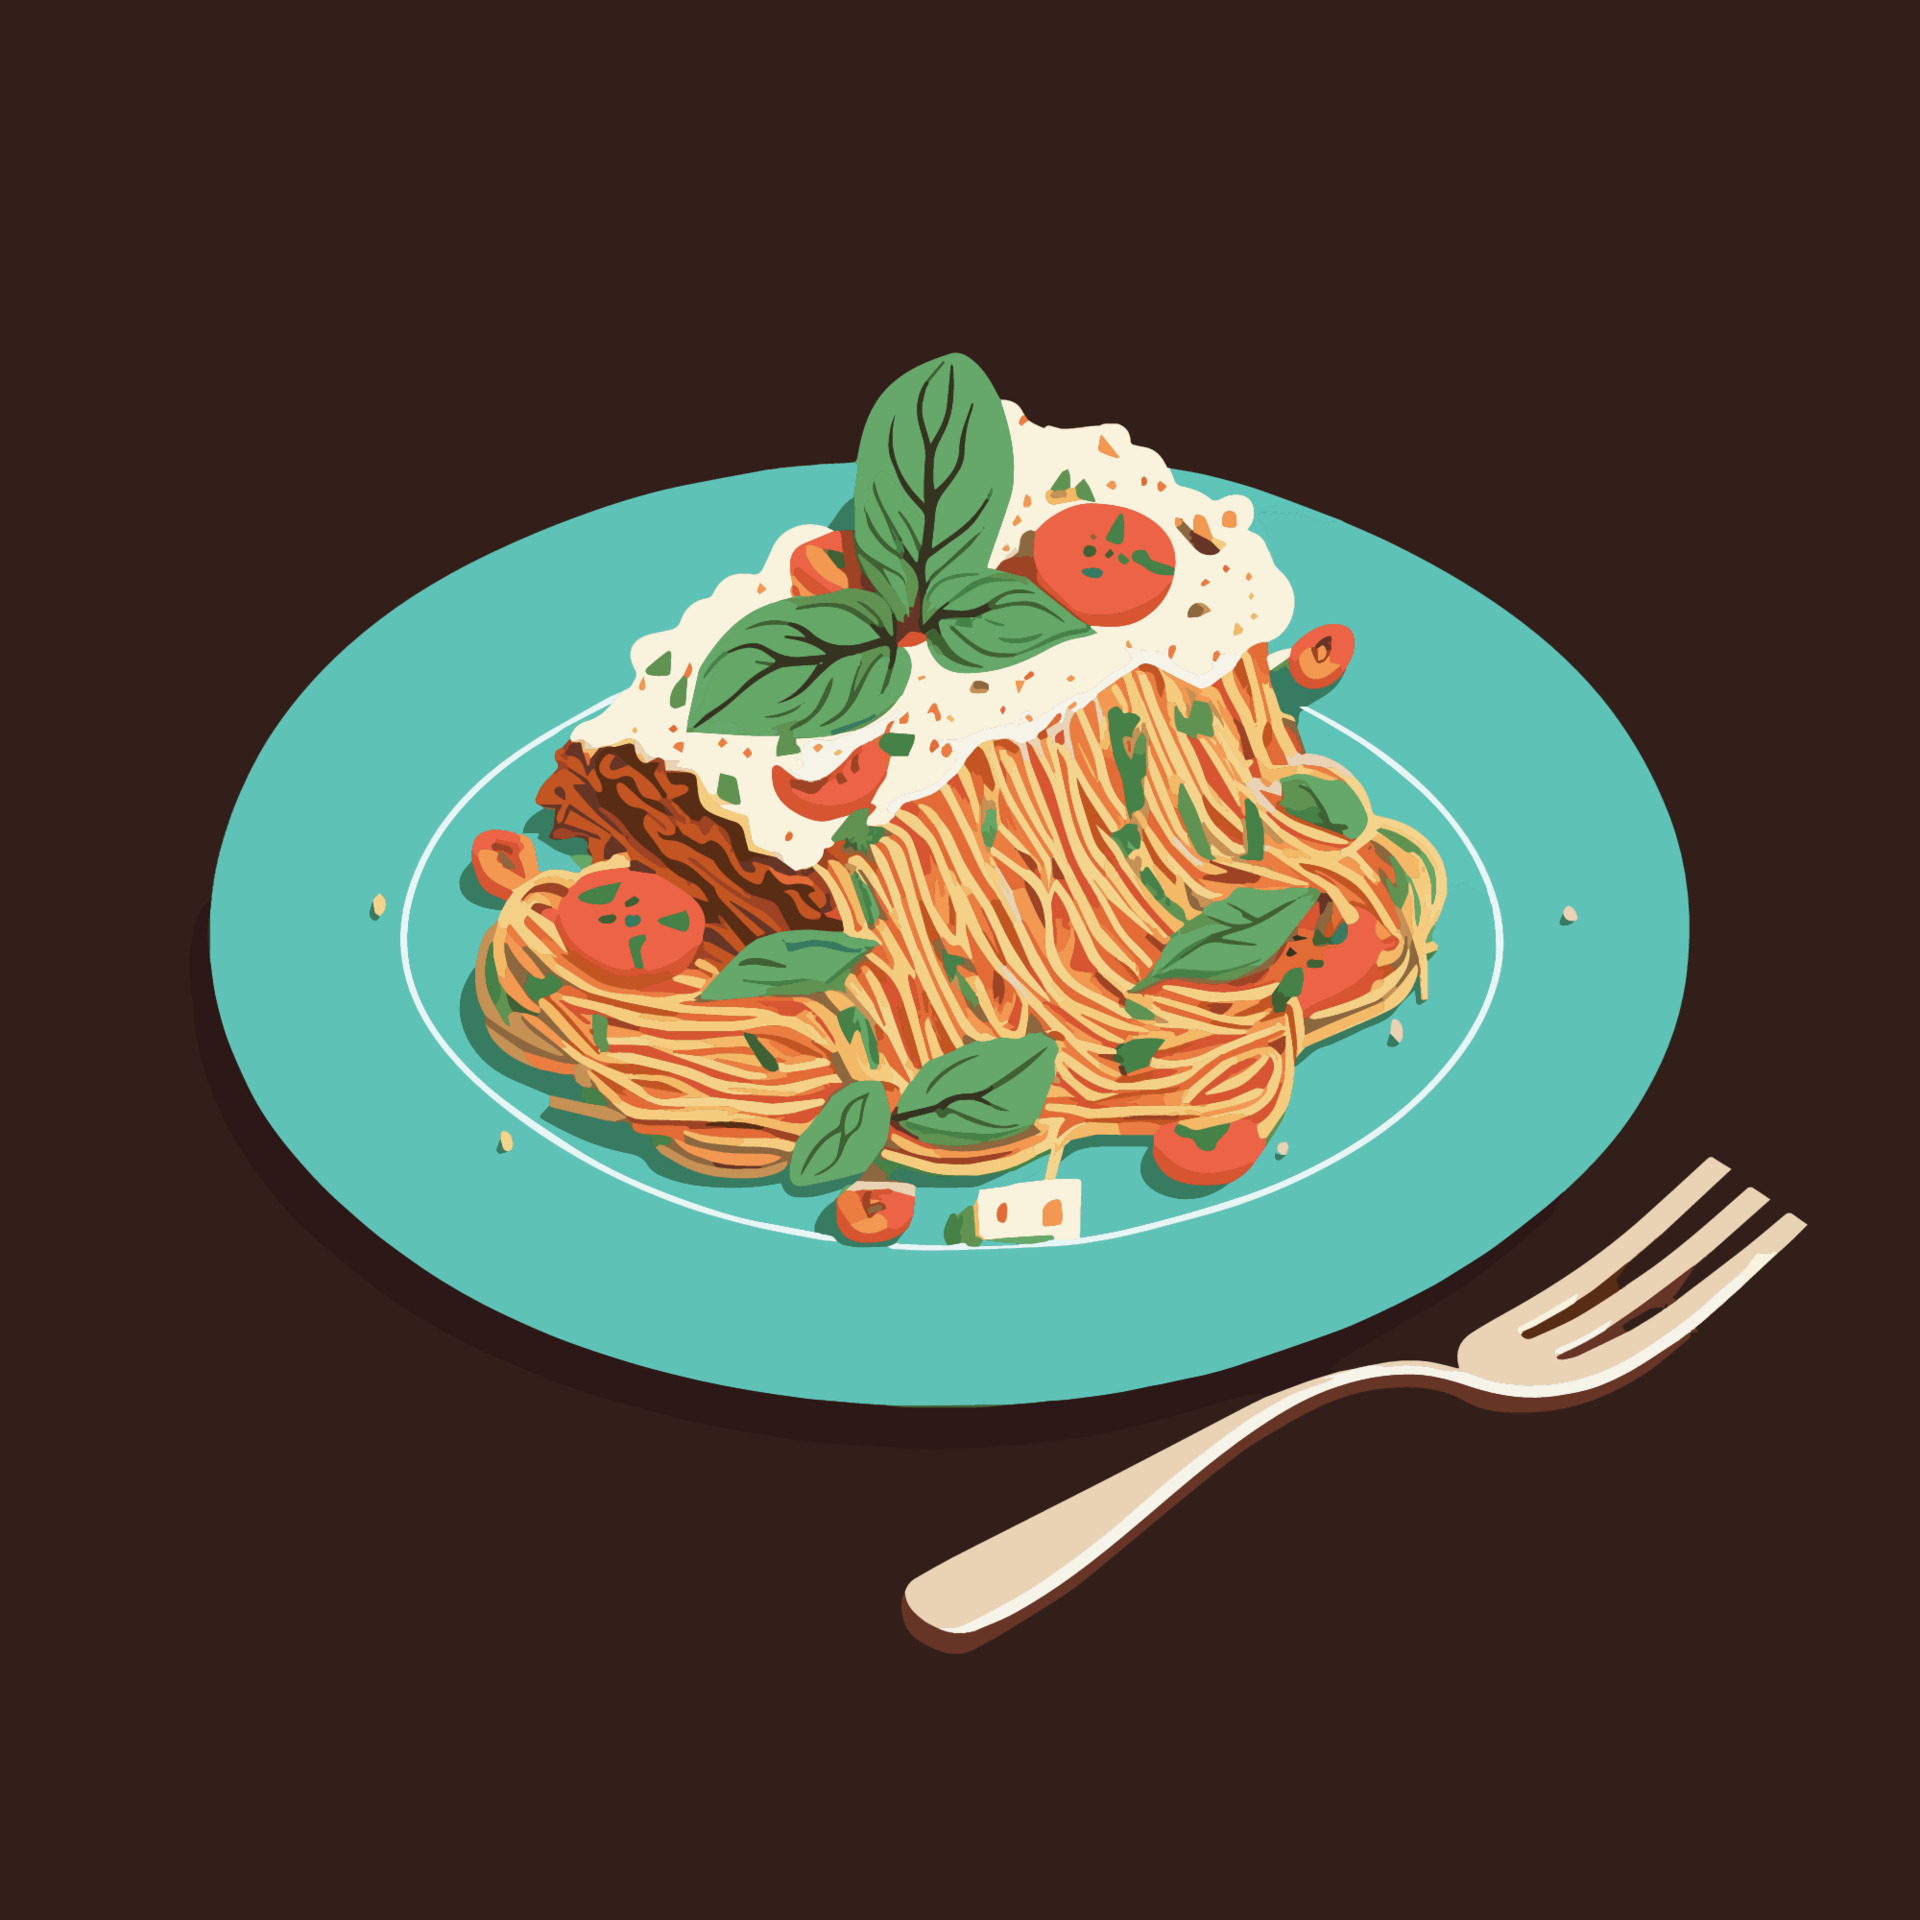 Spaghetti bolognese Italian Food on Plate vector illustration Cartoon Style  14802129 Vector Art at Vecteezy